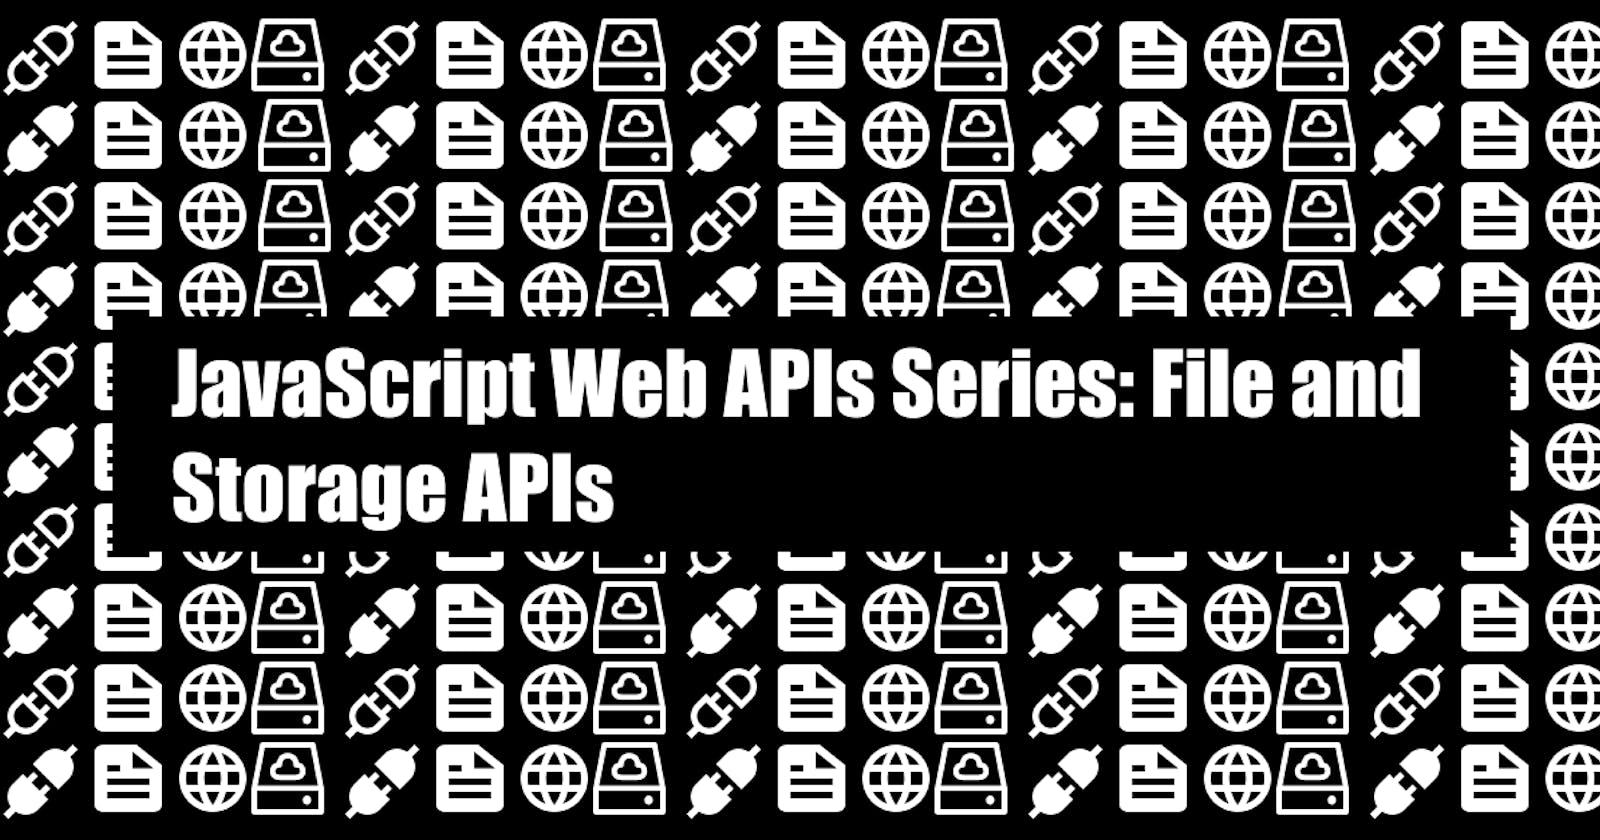 JavaScript Web APIs Series: File and Storage APIs